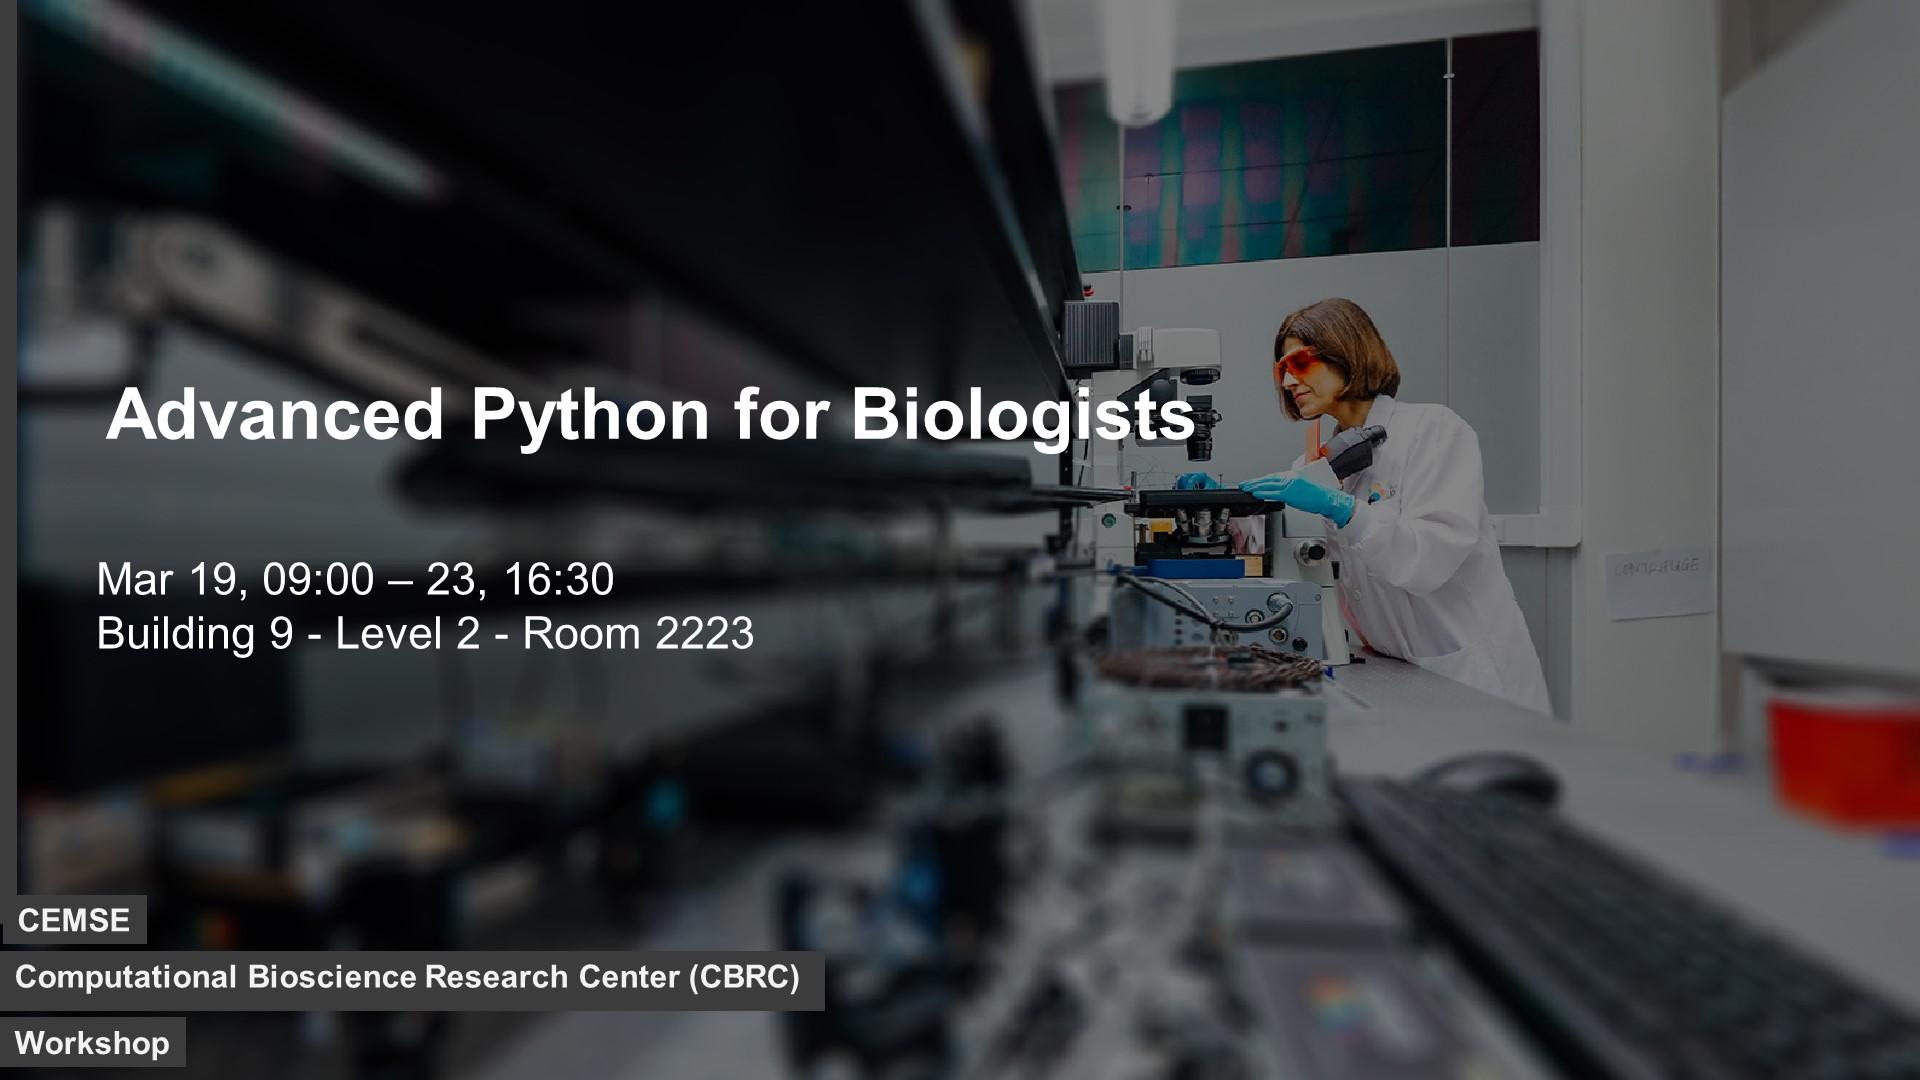 KAUST CEMSE CBRC Workshop Python for Biologists